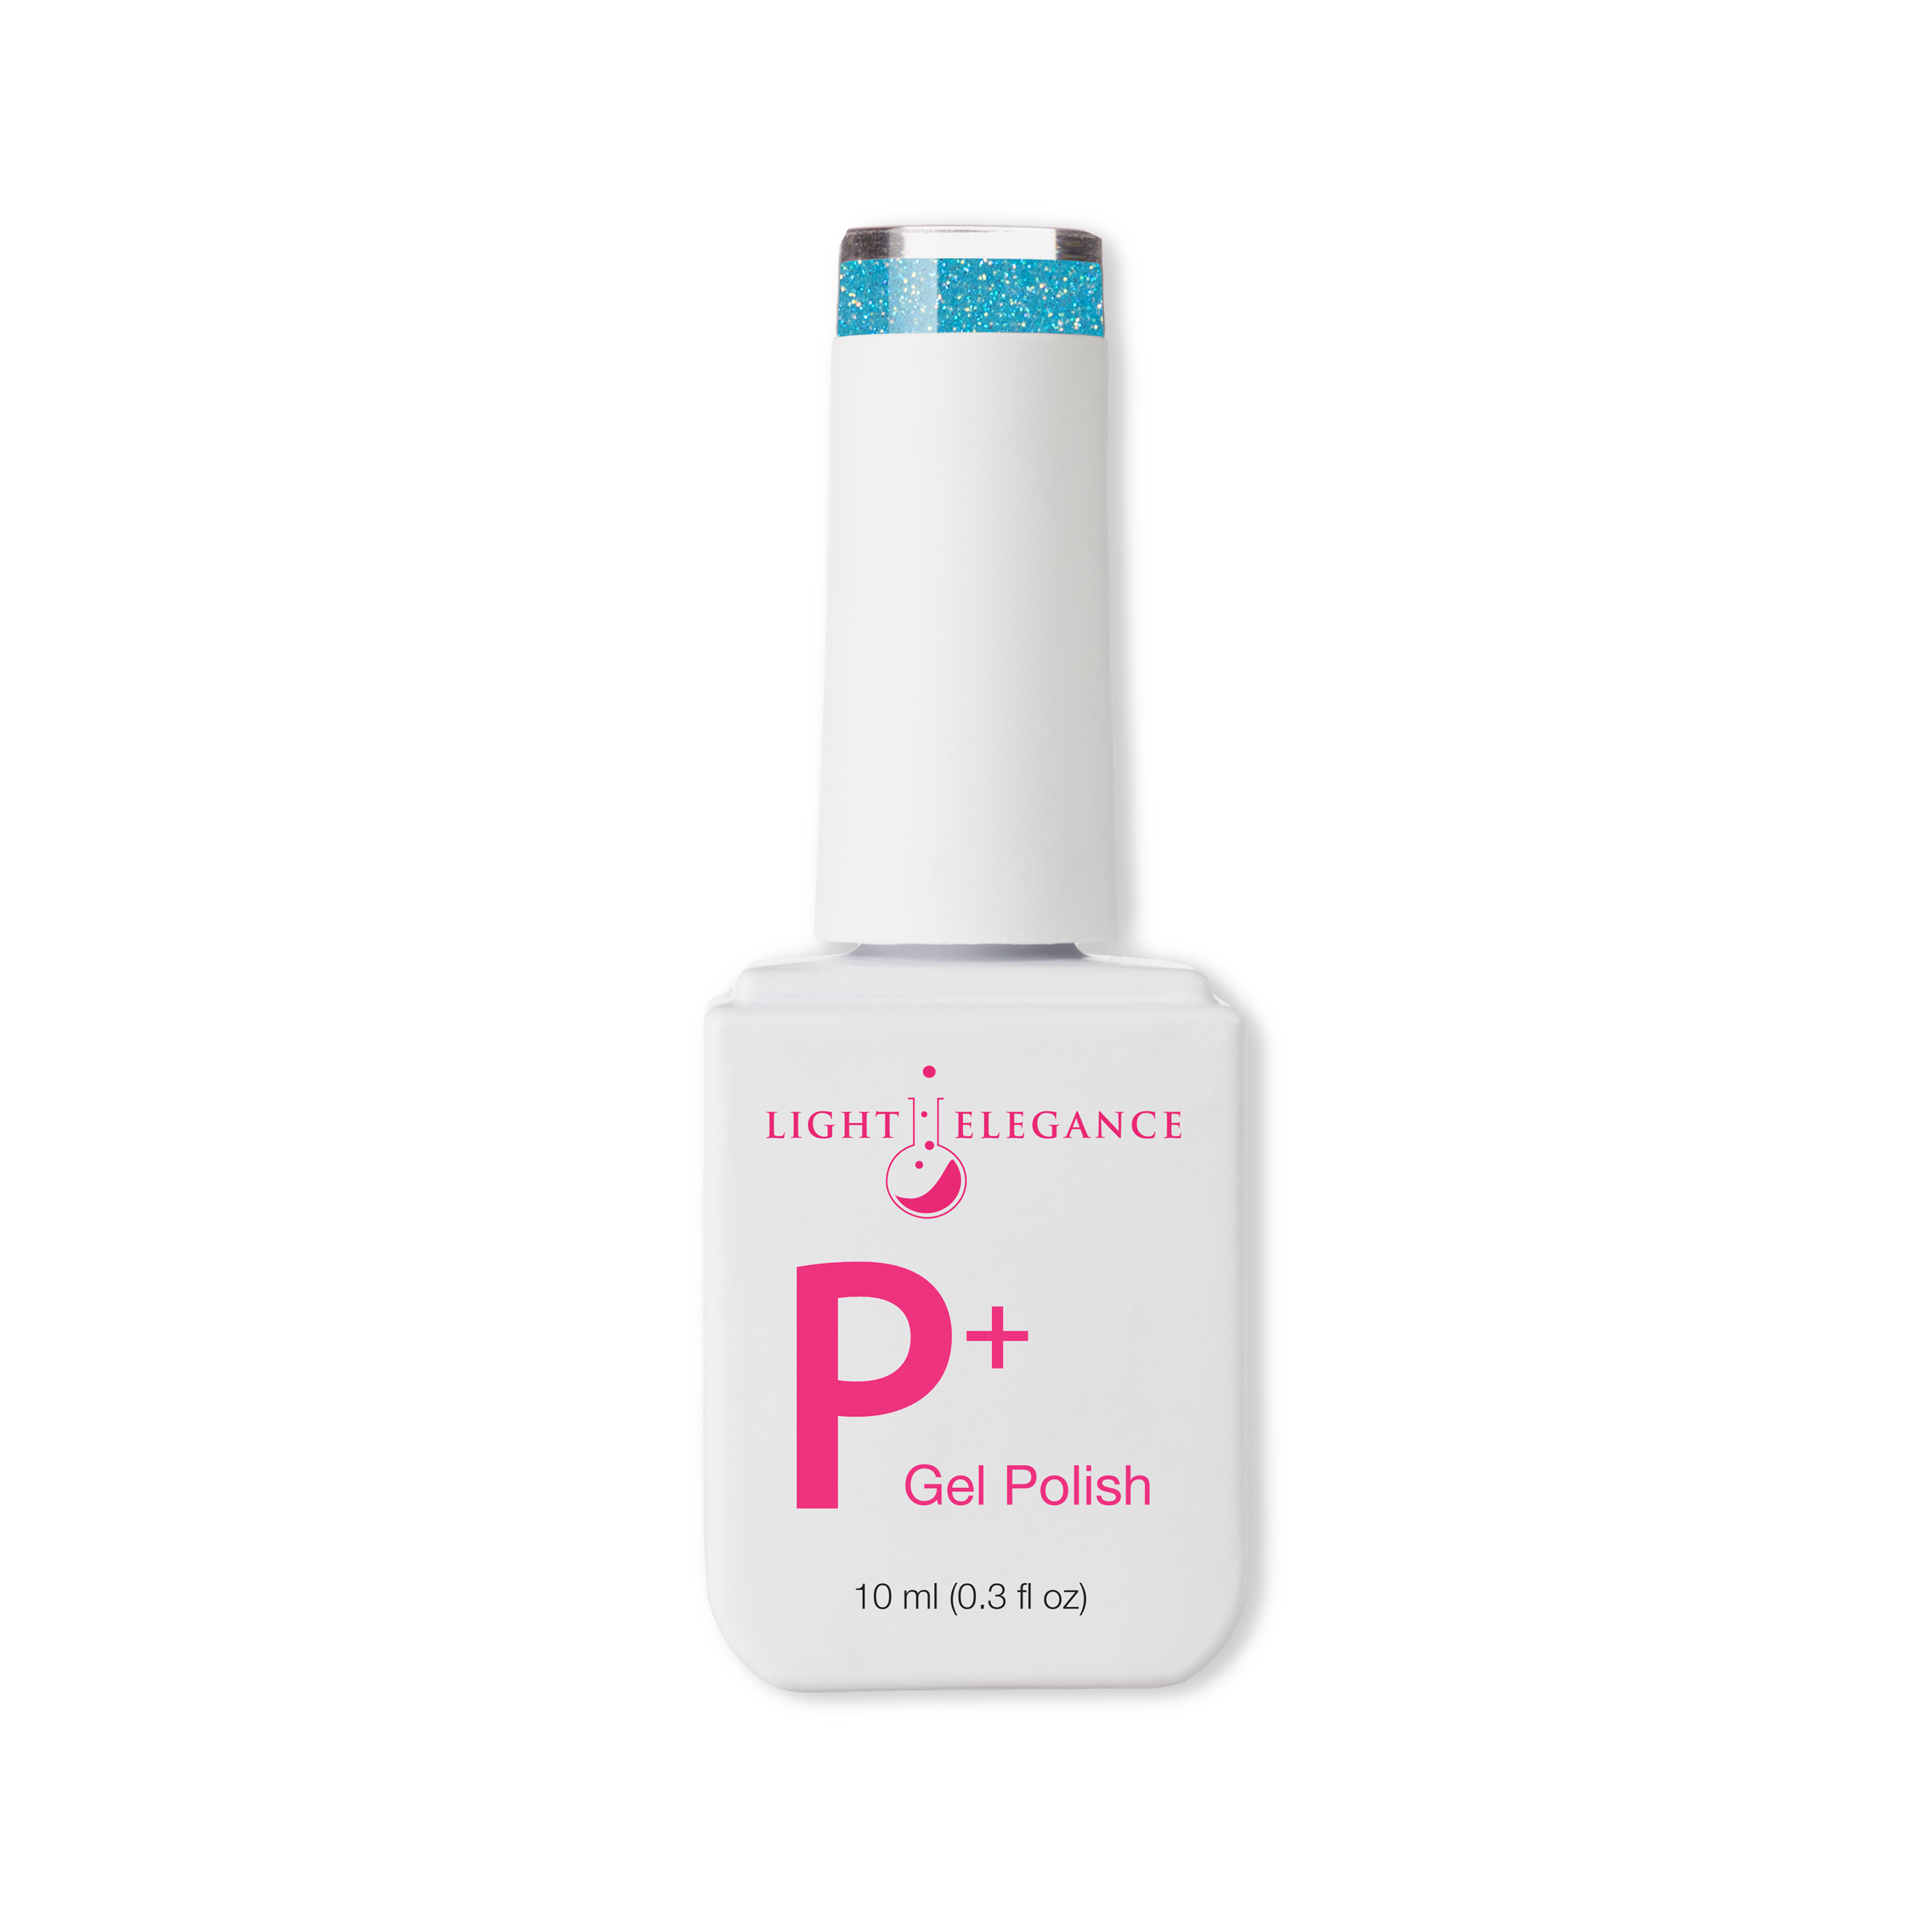 Light Elegance P+ Soak Off Glitter Gel - Stay Cool :: New Packaging - Creata Beauty - Professional Beauty Products